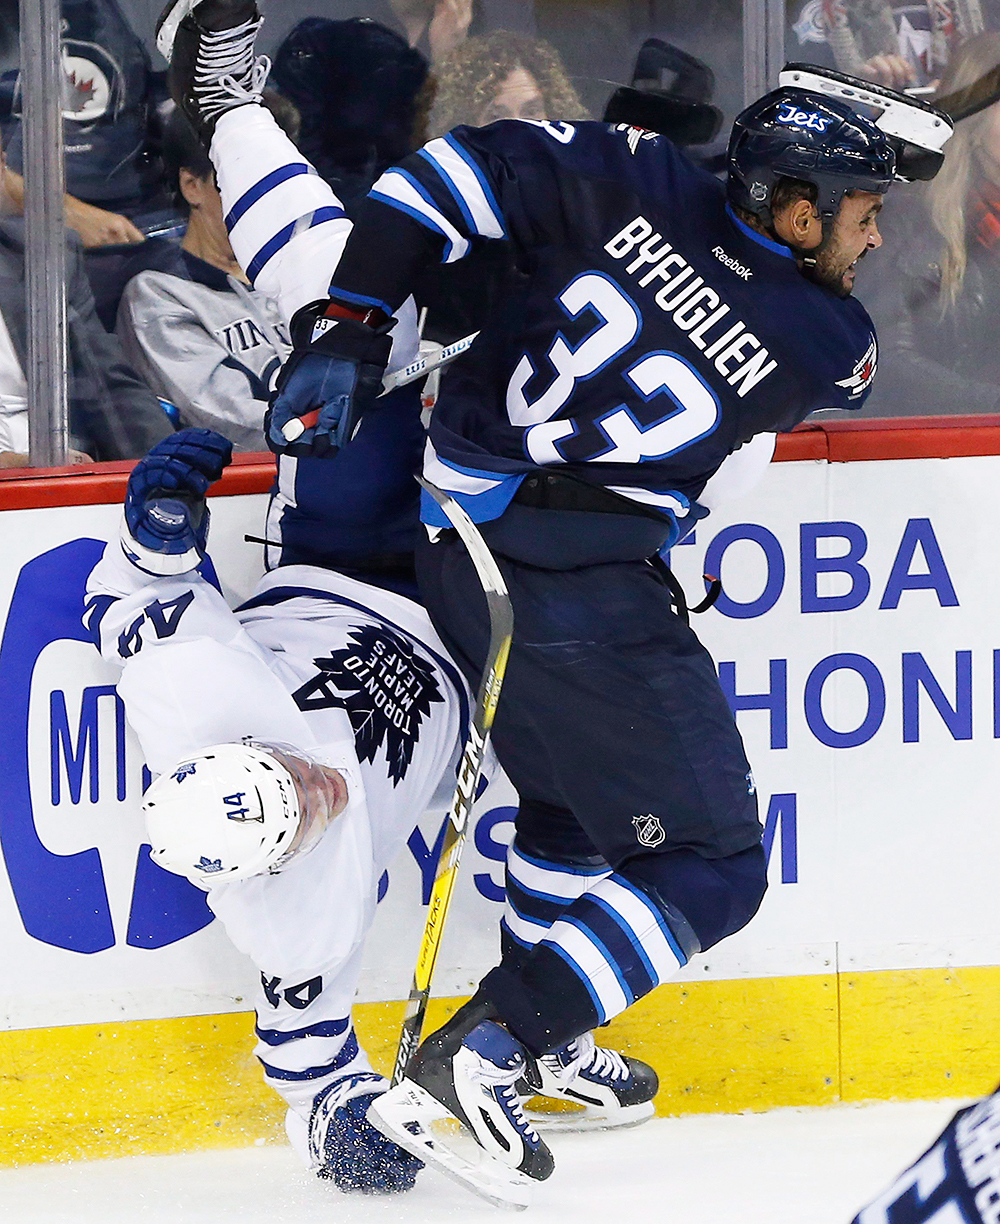 Winnipeg Jets star Dustin Byfuglien mulling NHL future during